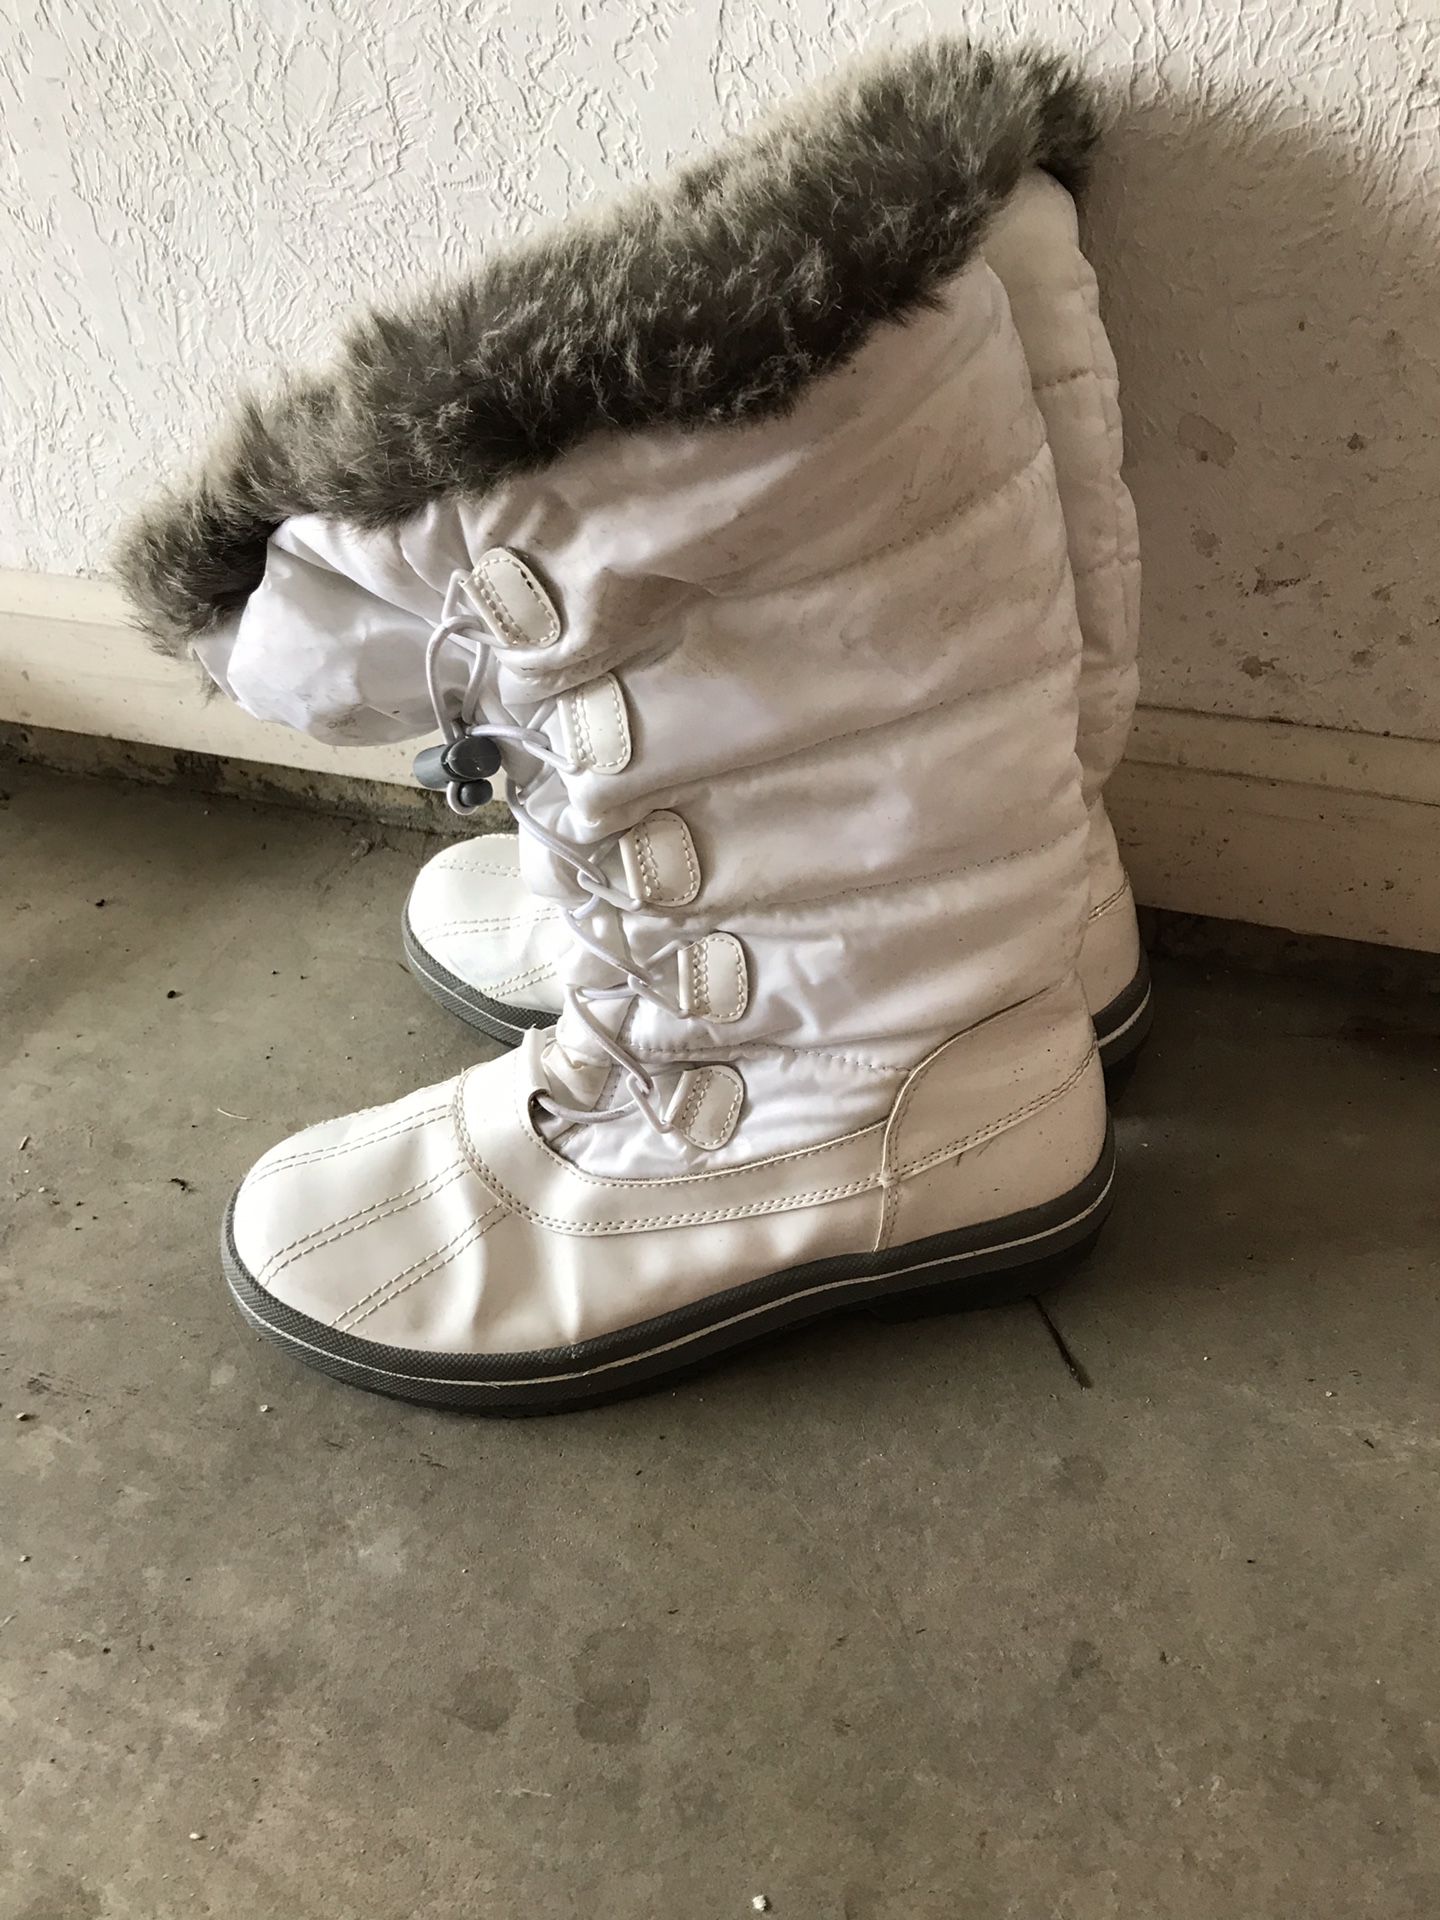 Size 9 women’s waterproof fur topped snow boots